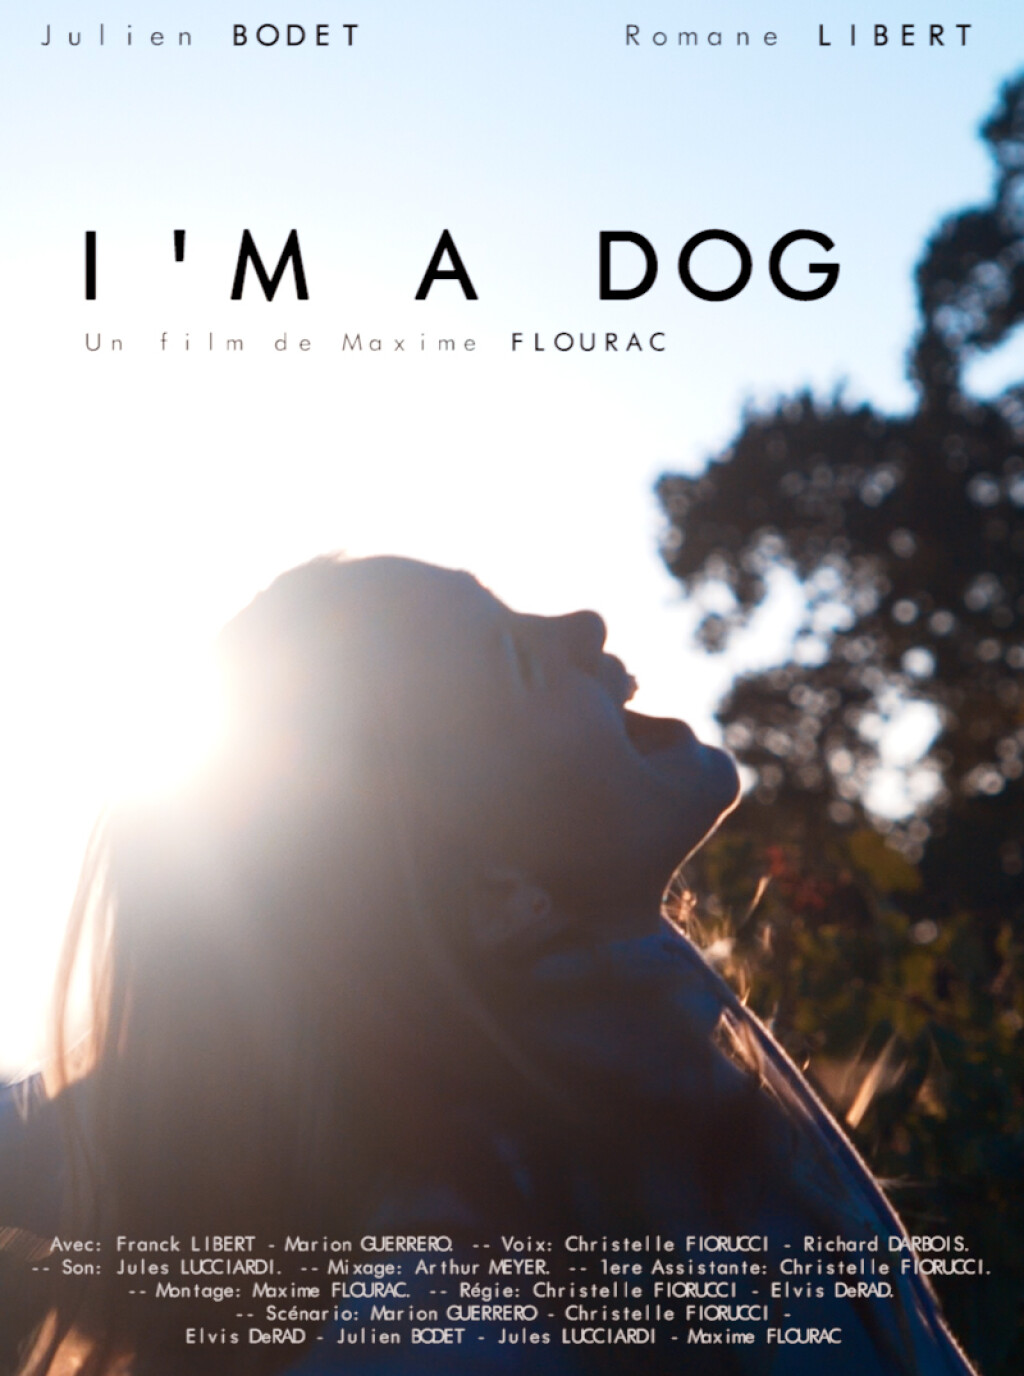 Filmposter for I'M A DOG